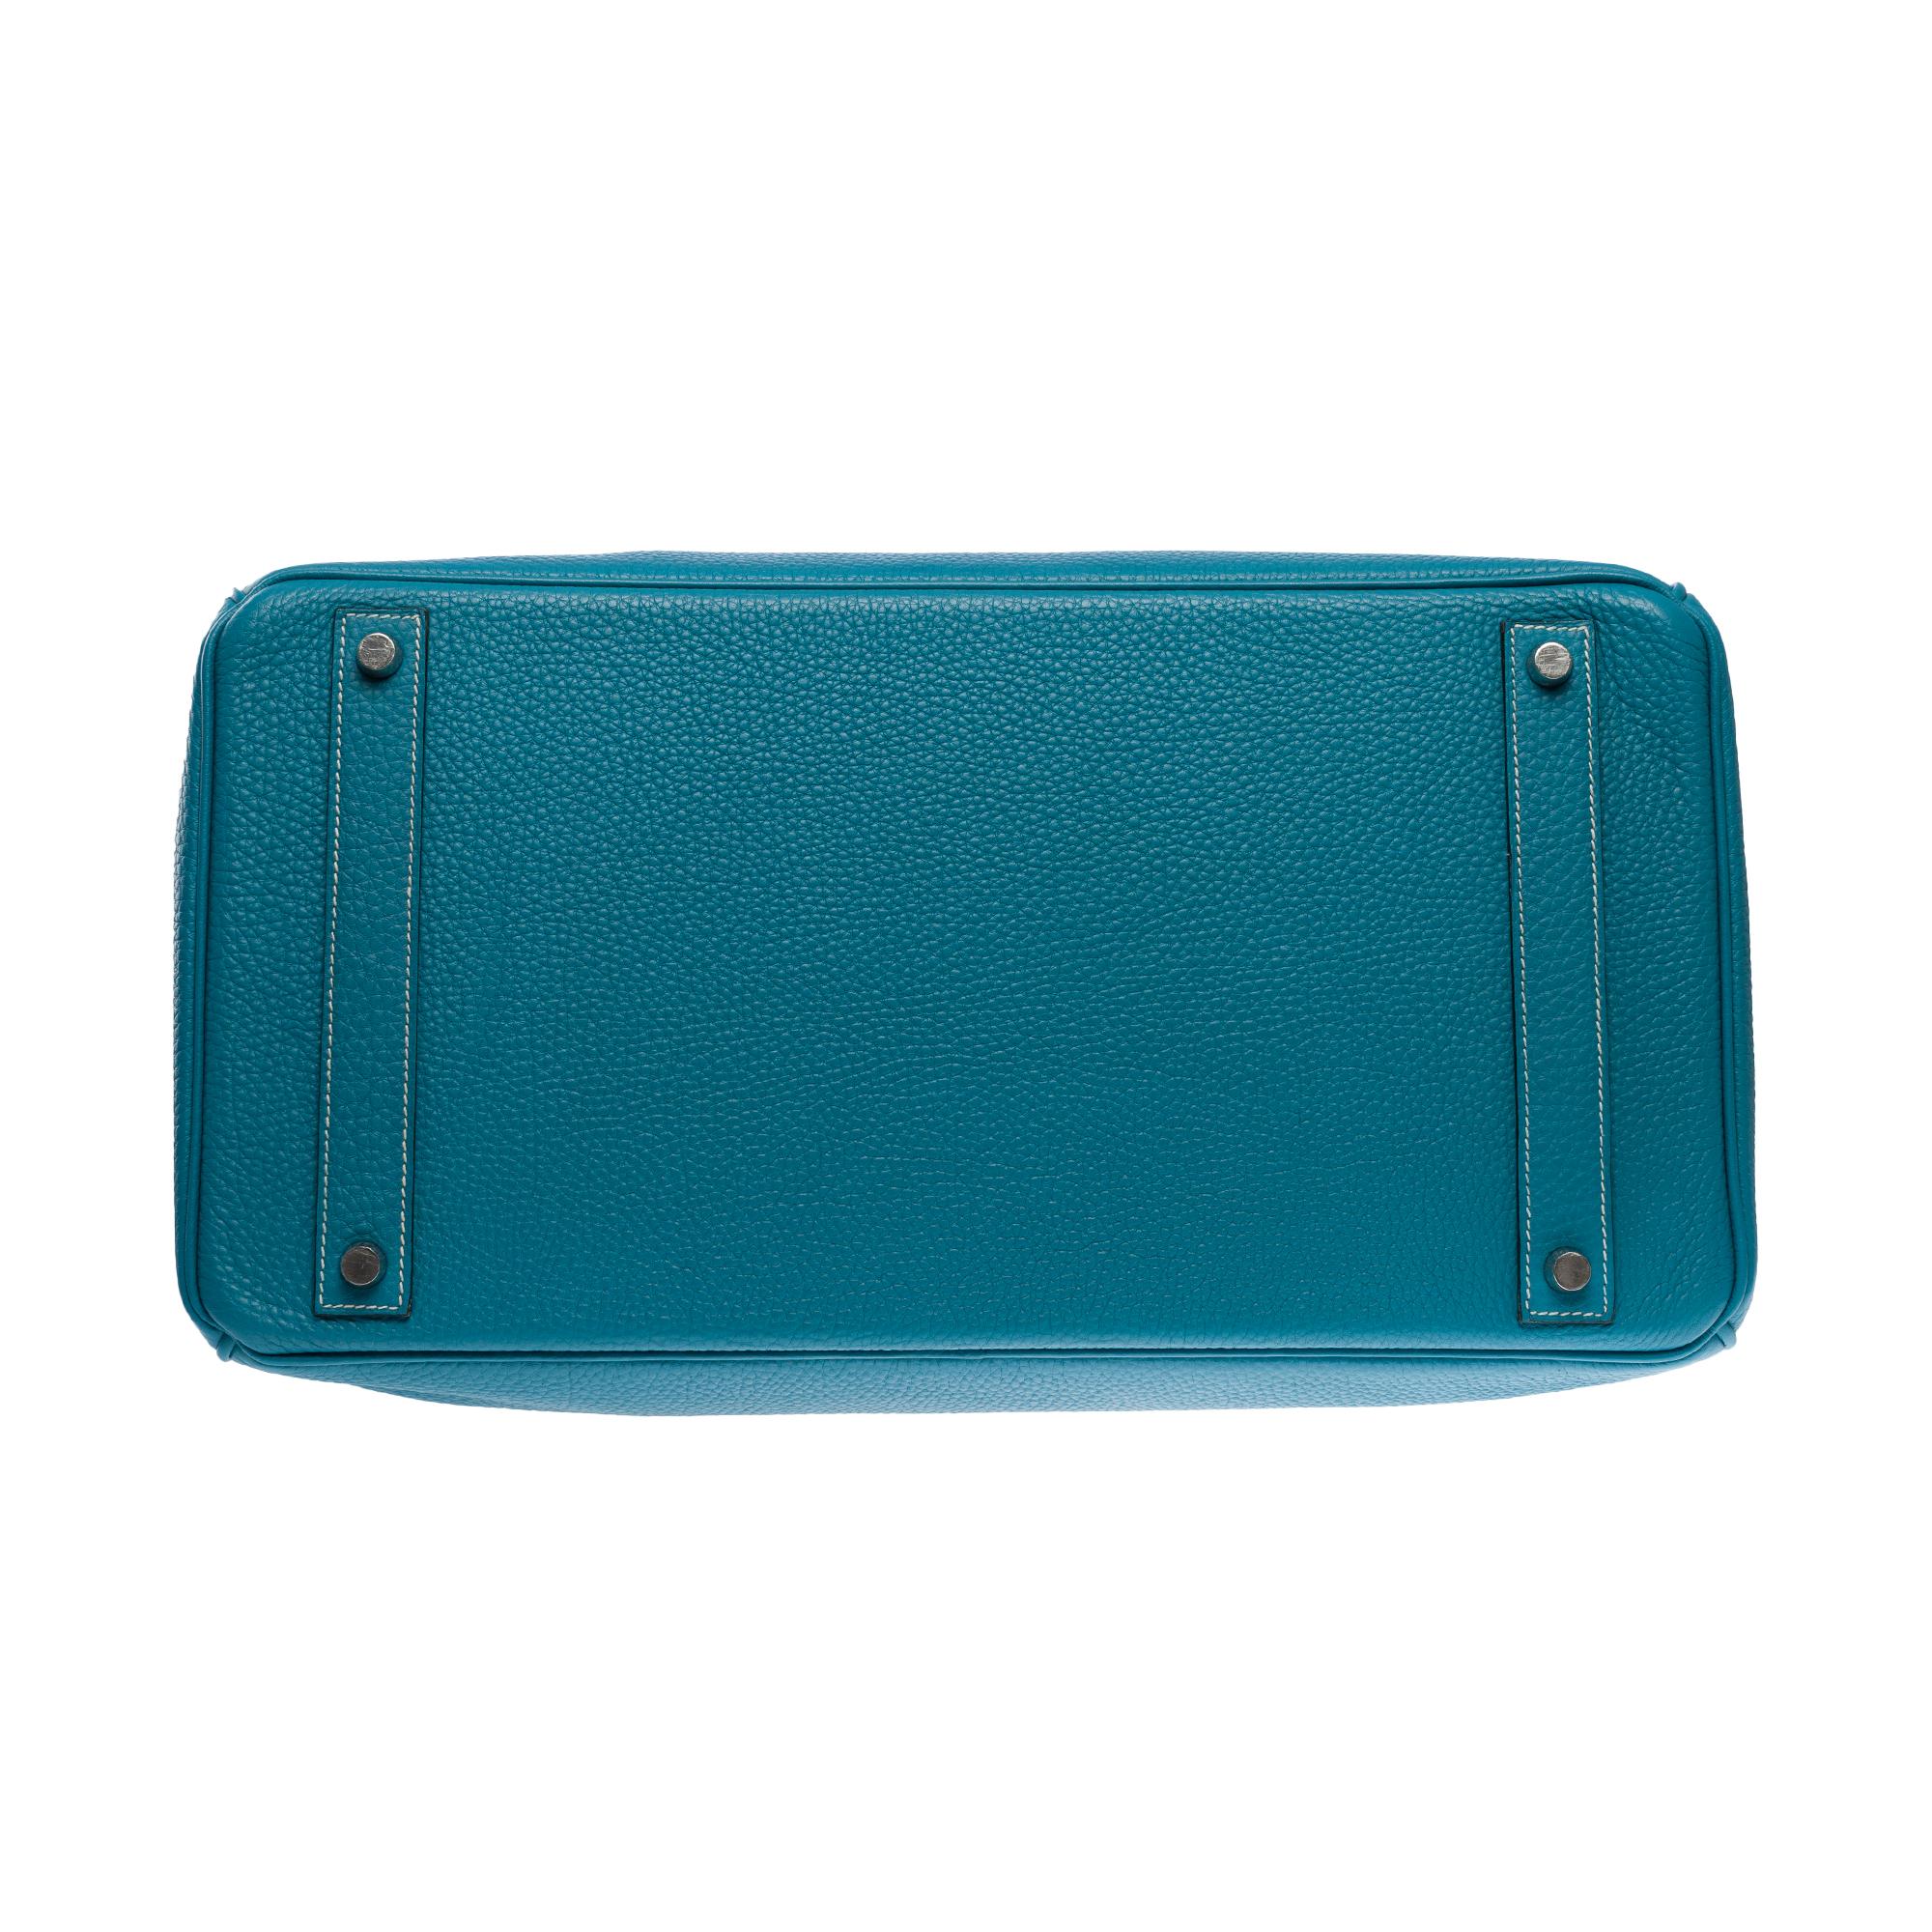 Stunning Hermes Birkin 40cm handbag in Blue Jean Togo leather, SHW 5